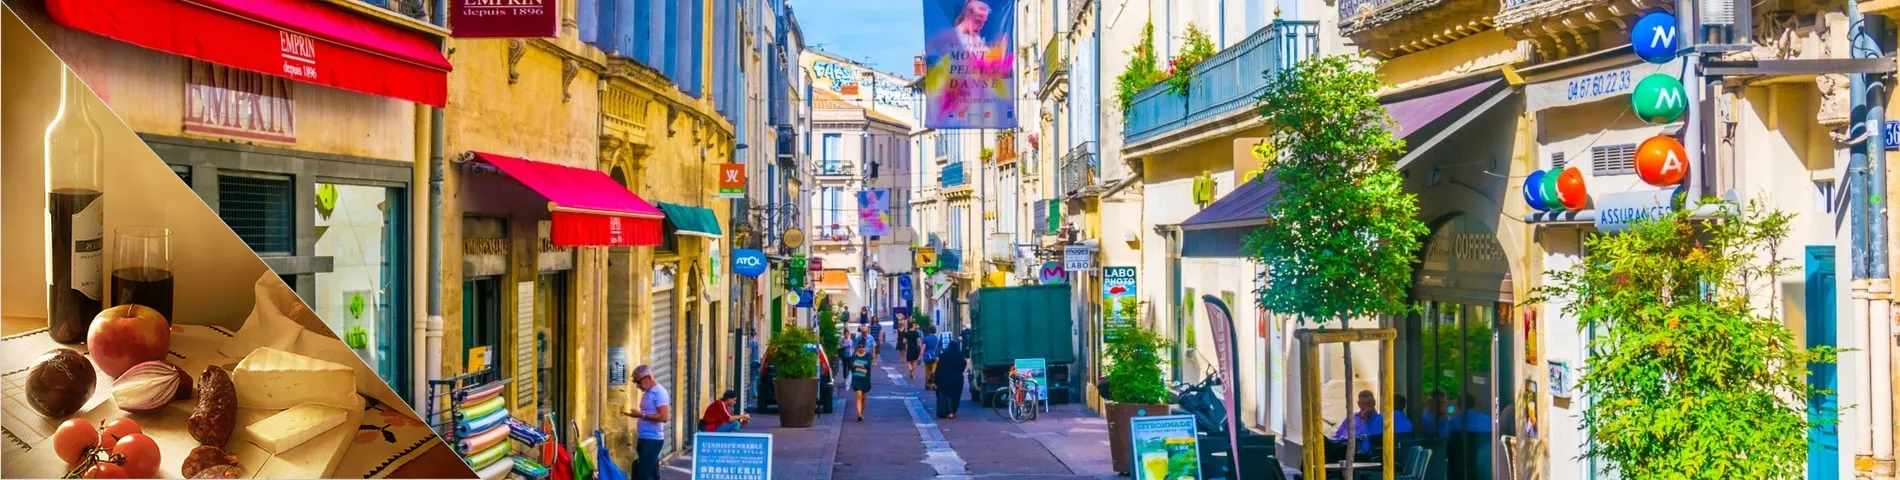 Montpellier - Ranska & kulttuuri